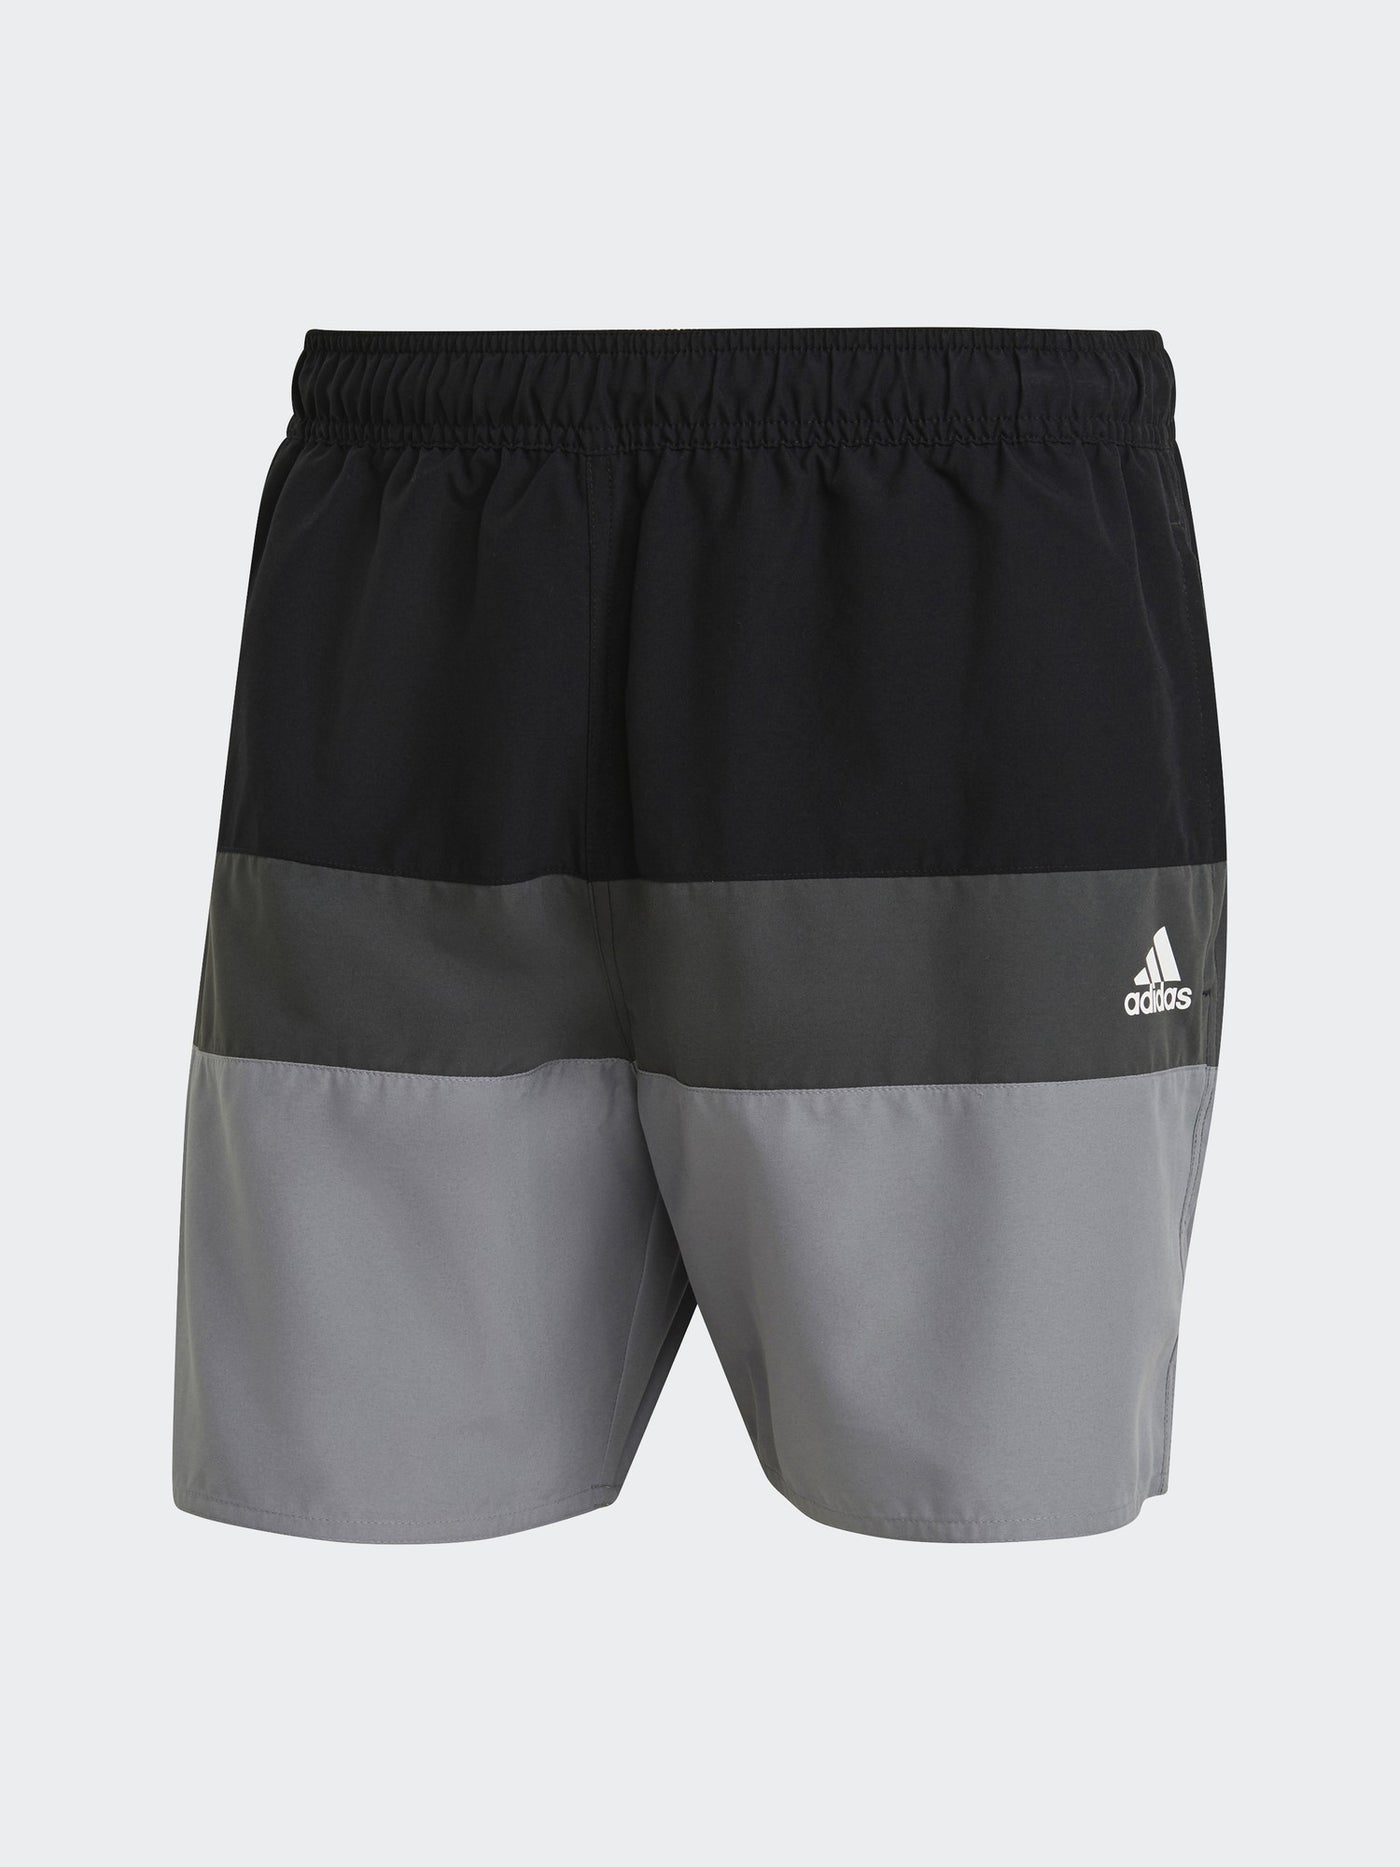 Swim Shorts - Short-Length Colorblock